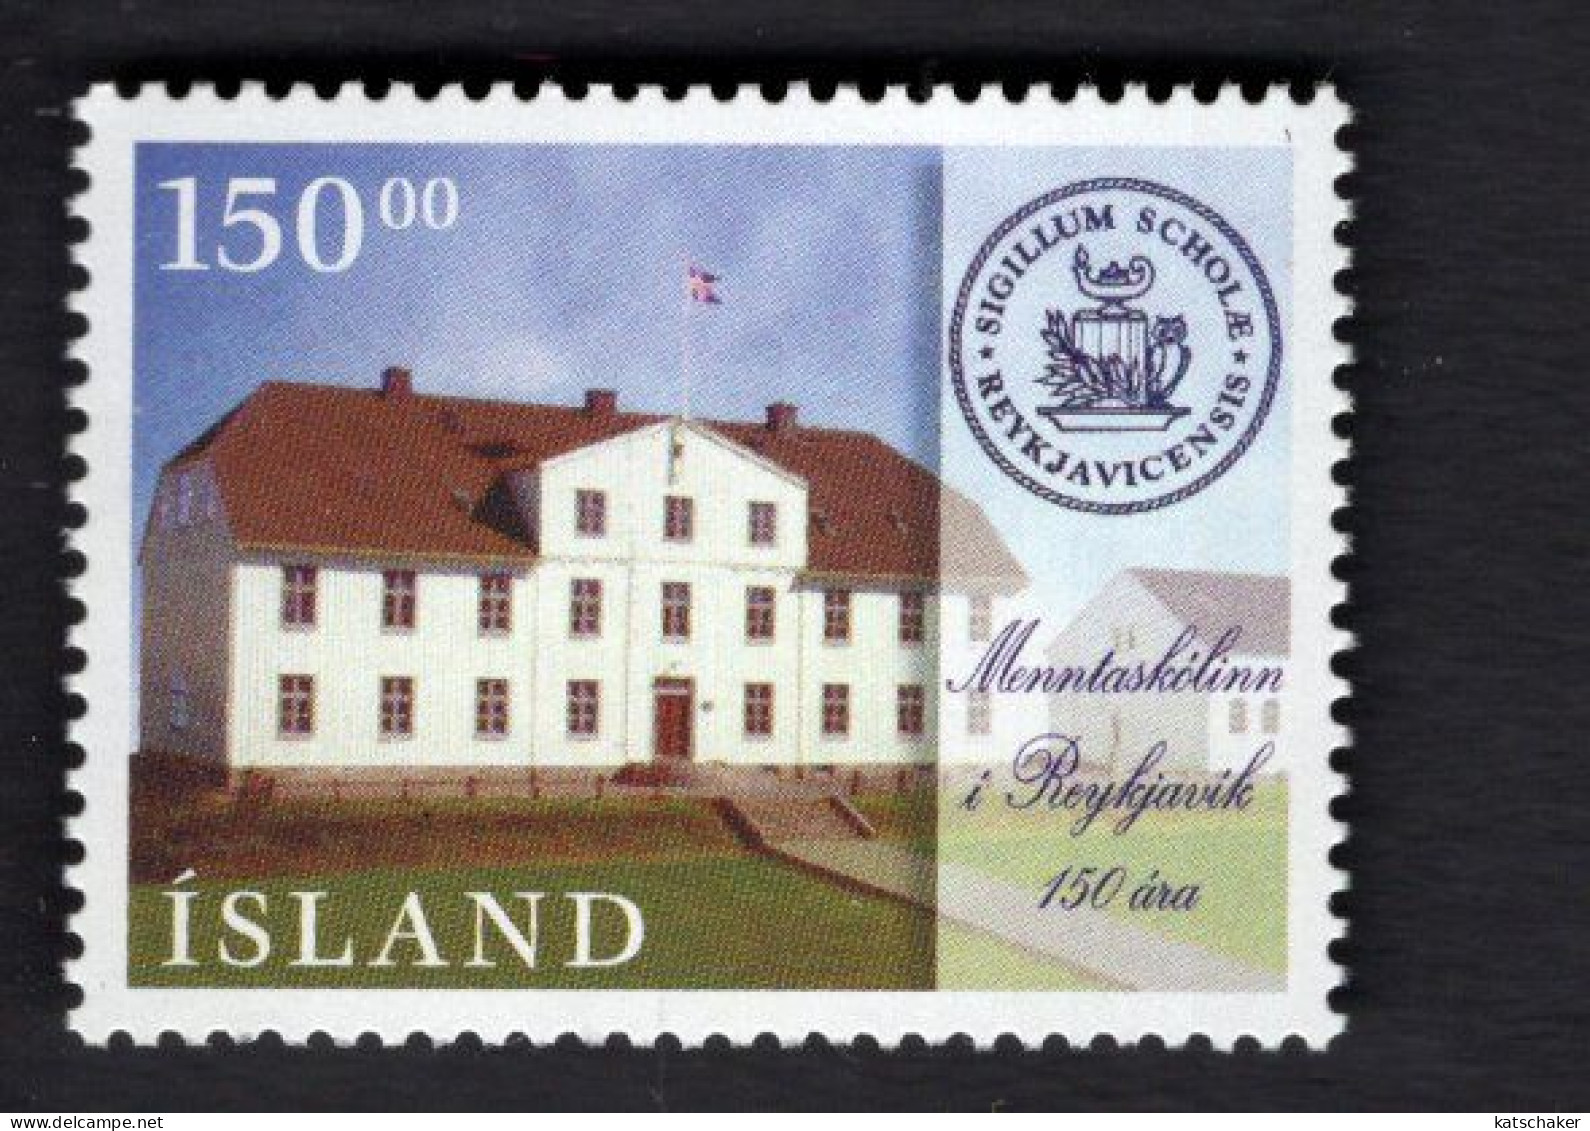 2022466019 1996 SCOTT 829 (XX)  POSTFRIS MINT NEVER HINGED - REYKJAVIK SCHOOL - 150TH ANNIV - Unused Stamps